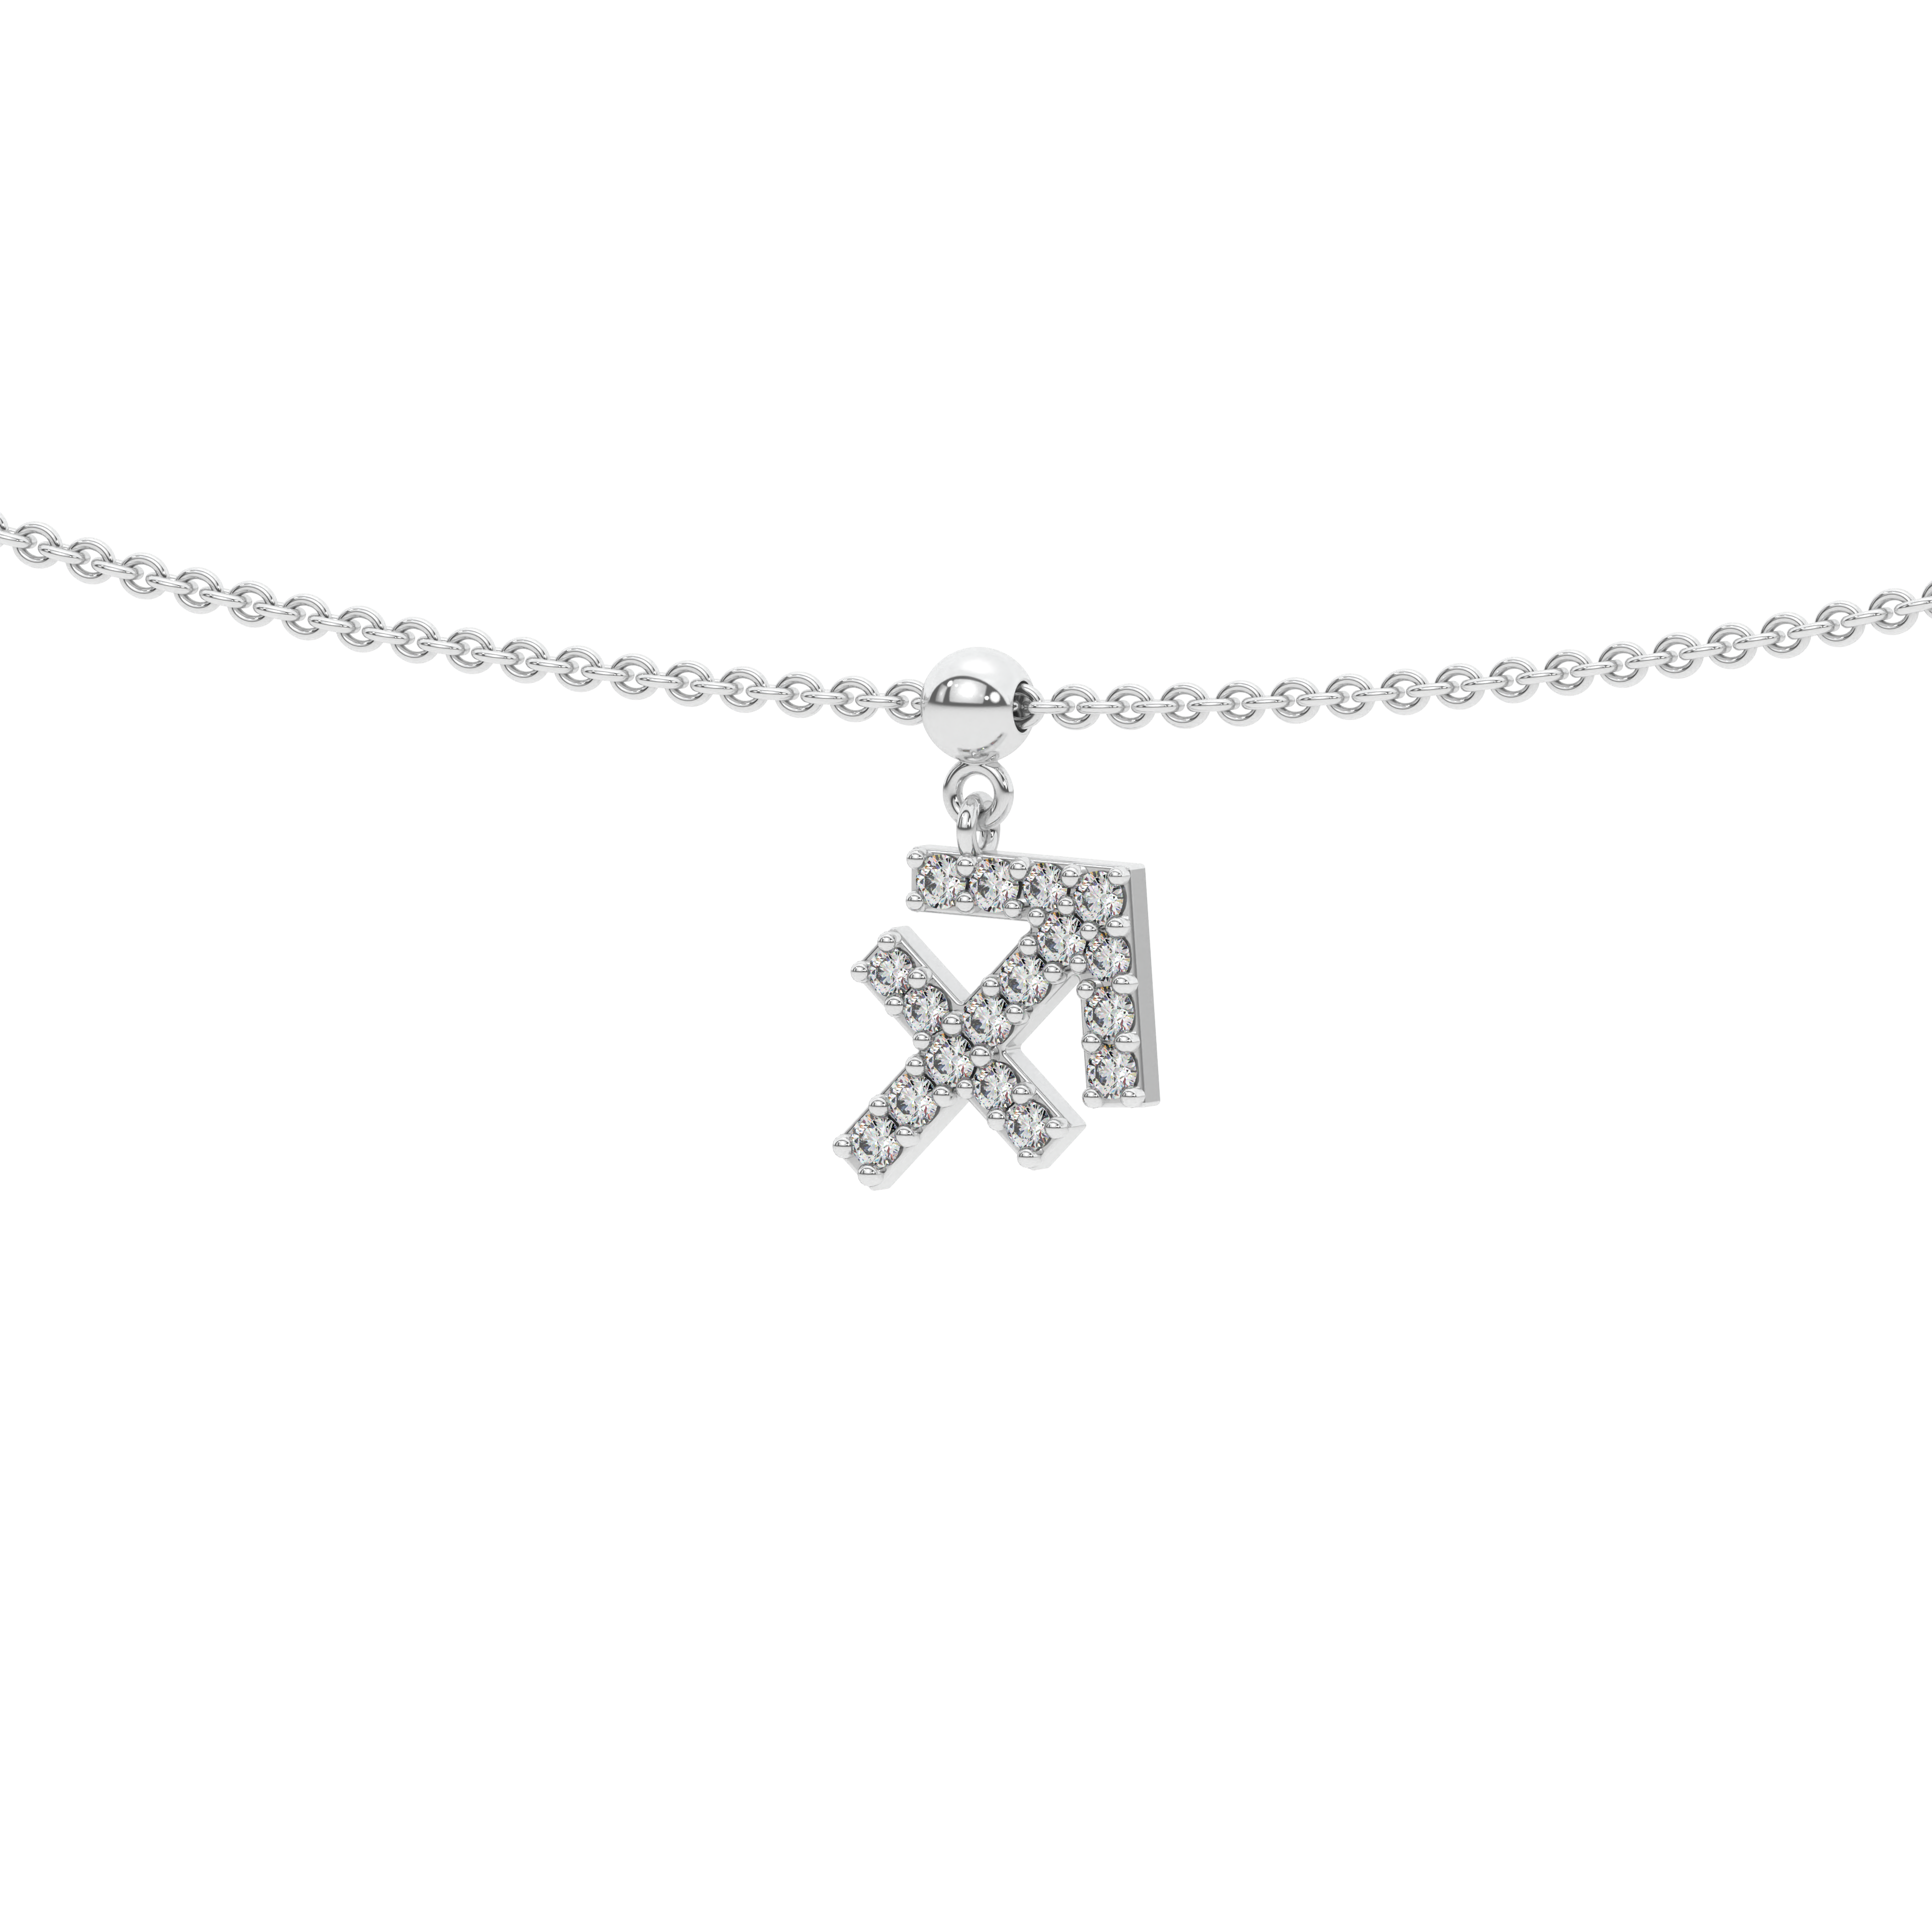 Sagittarius stone pave' zodiac necklace